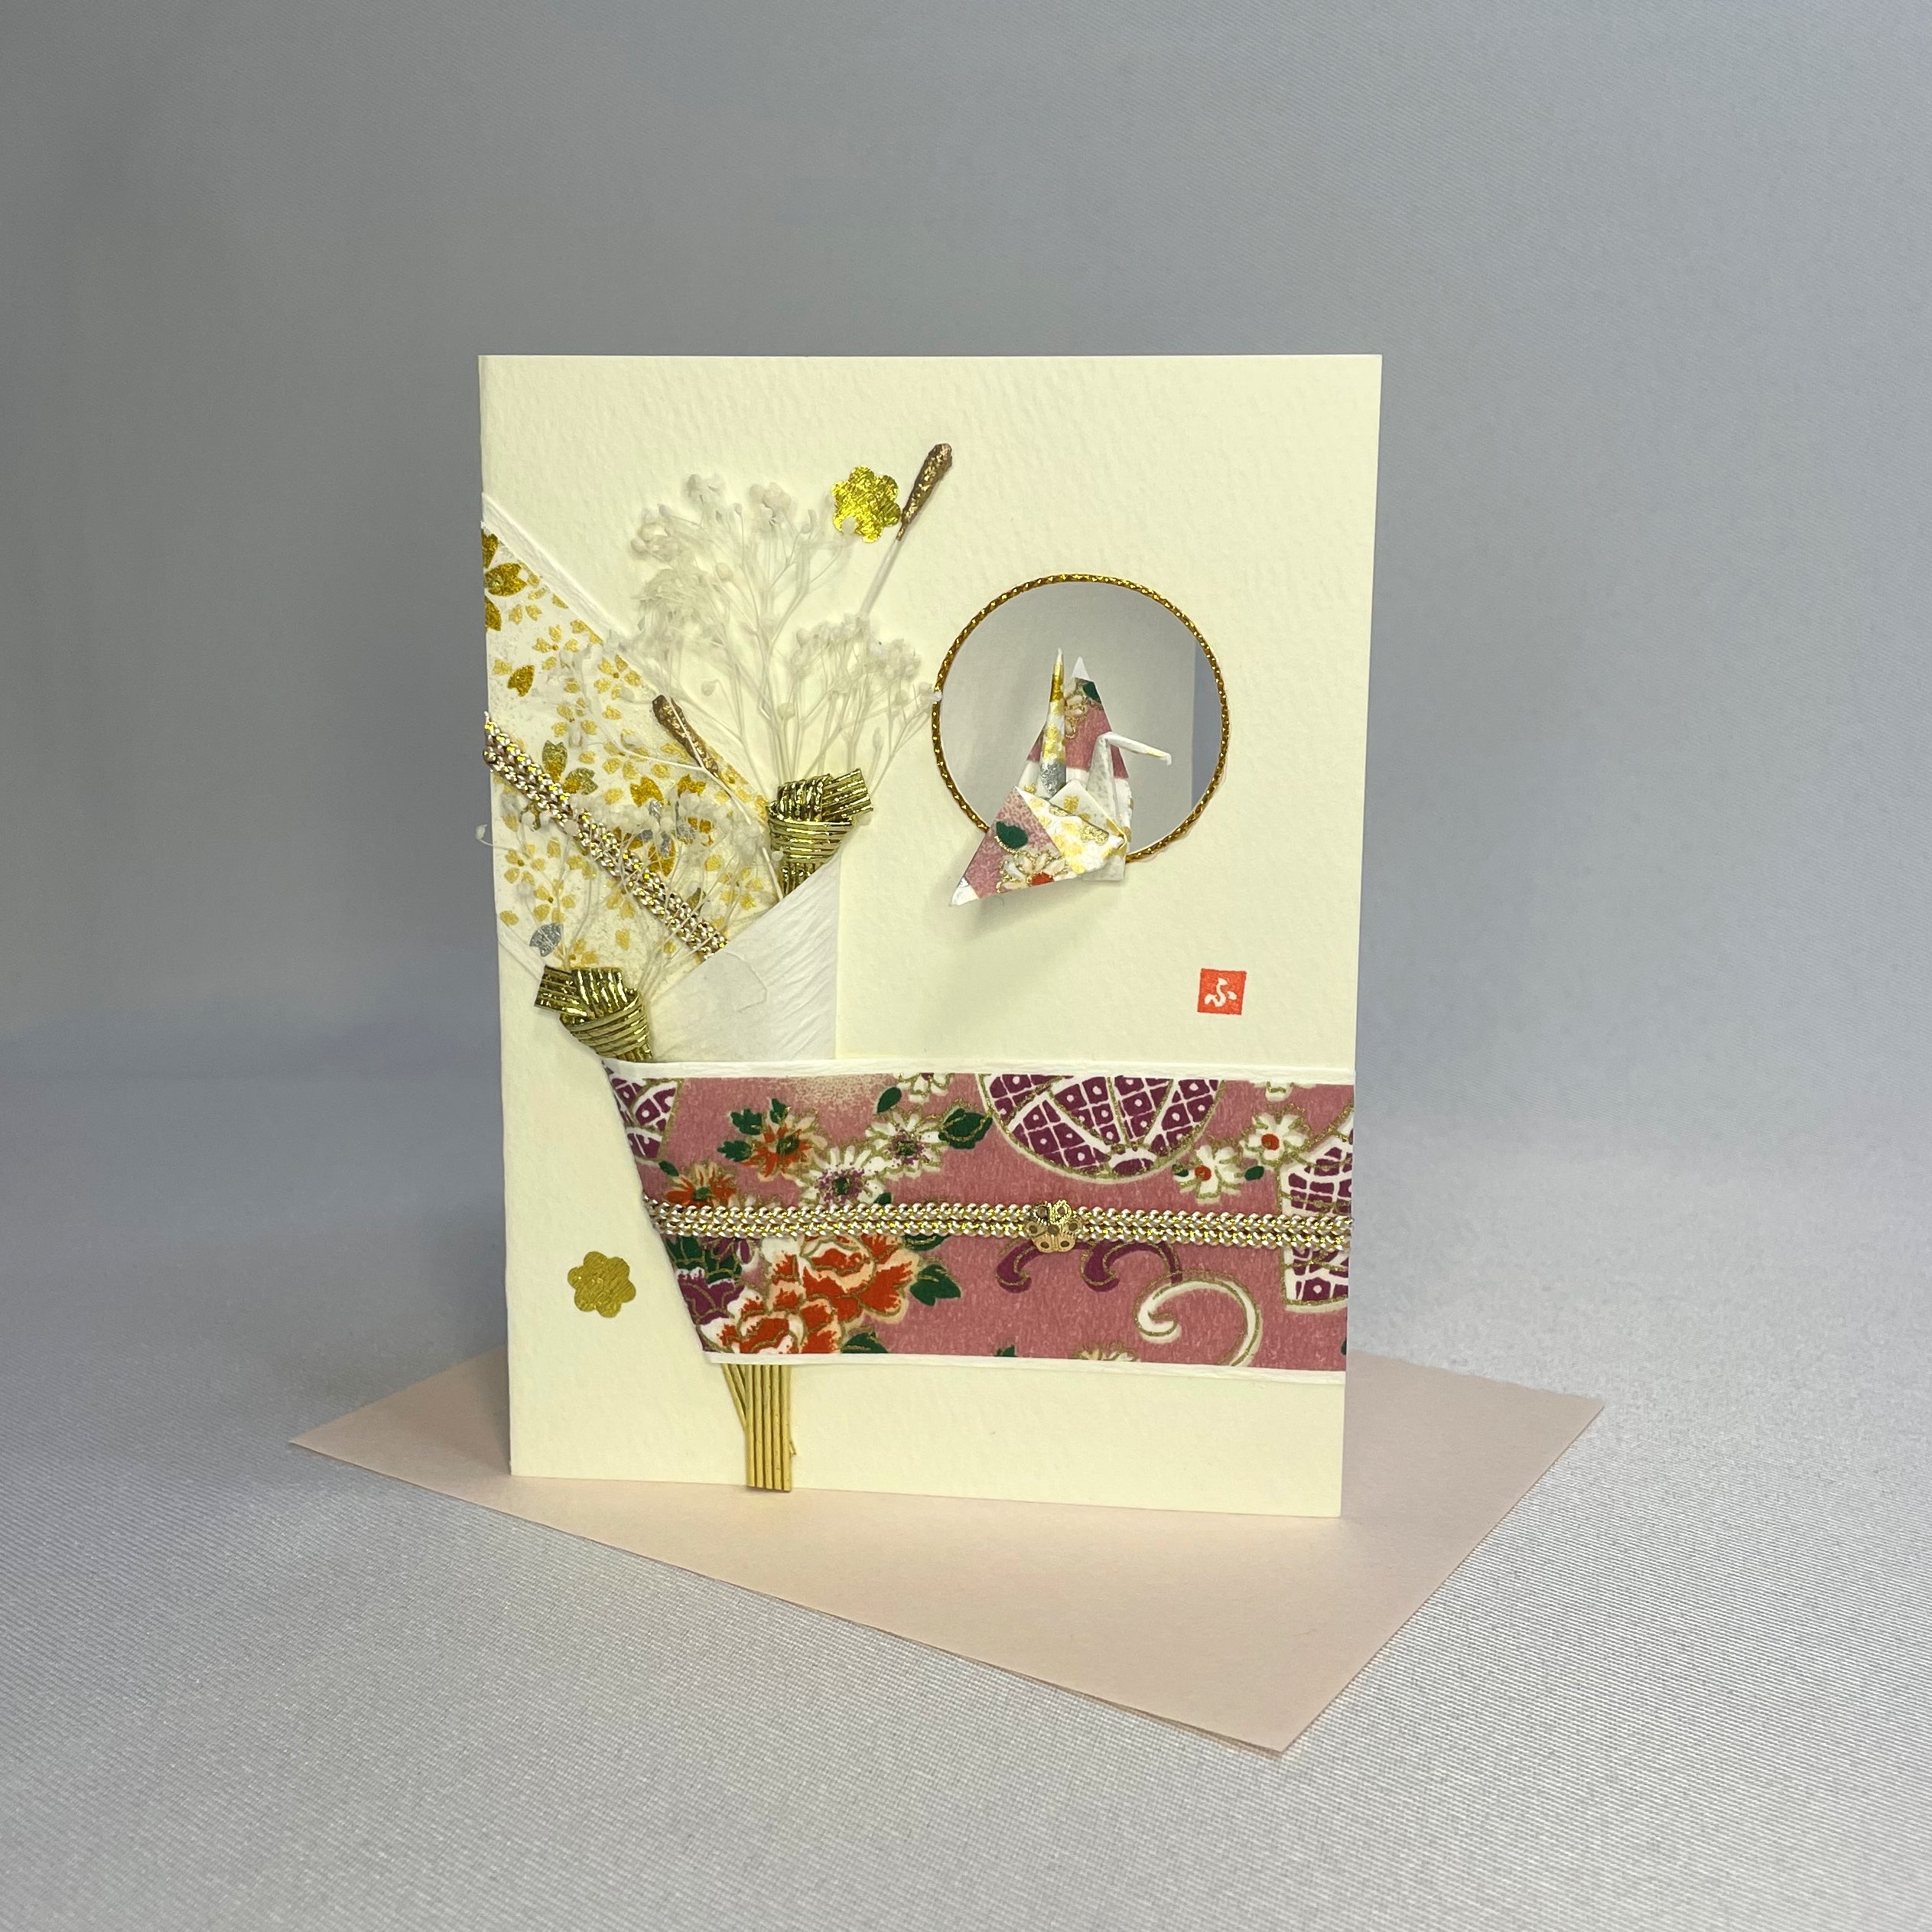 Handmade Greeting Card "Pink Crane"